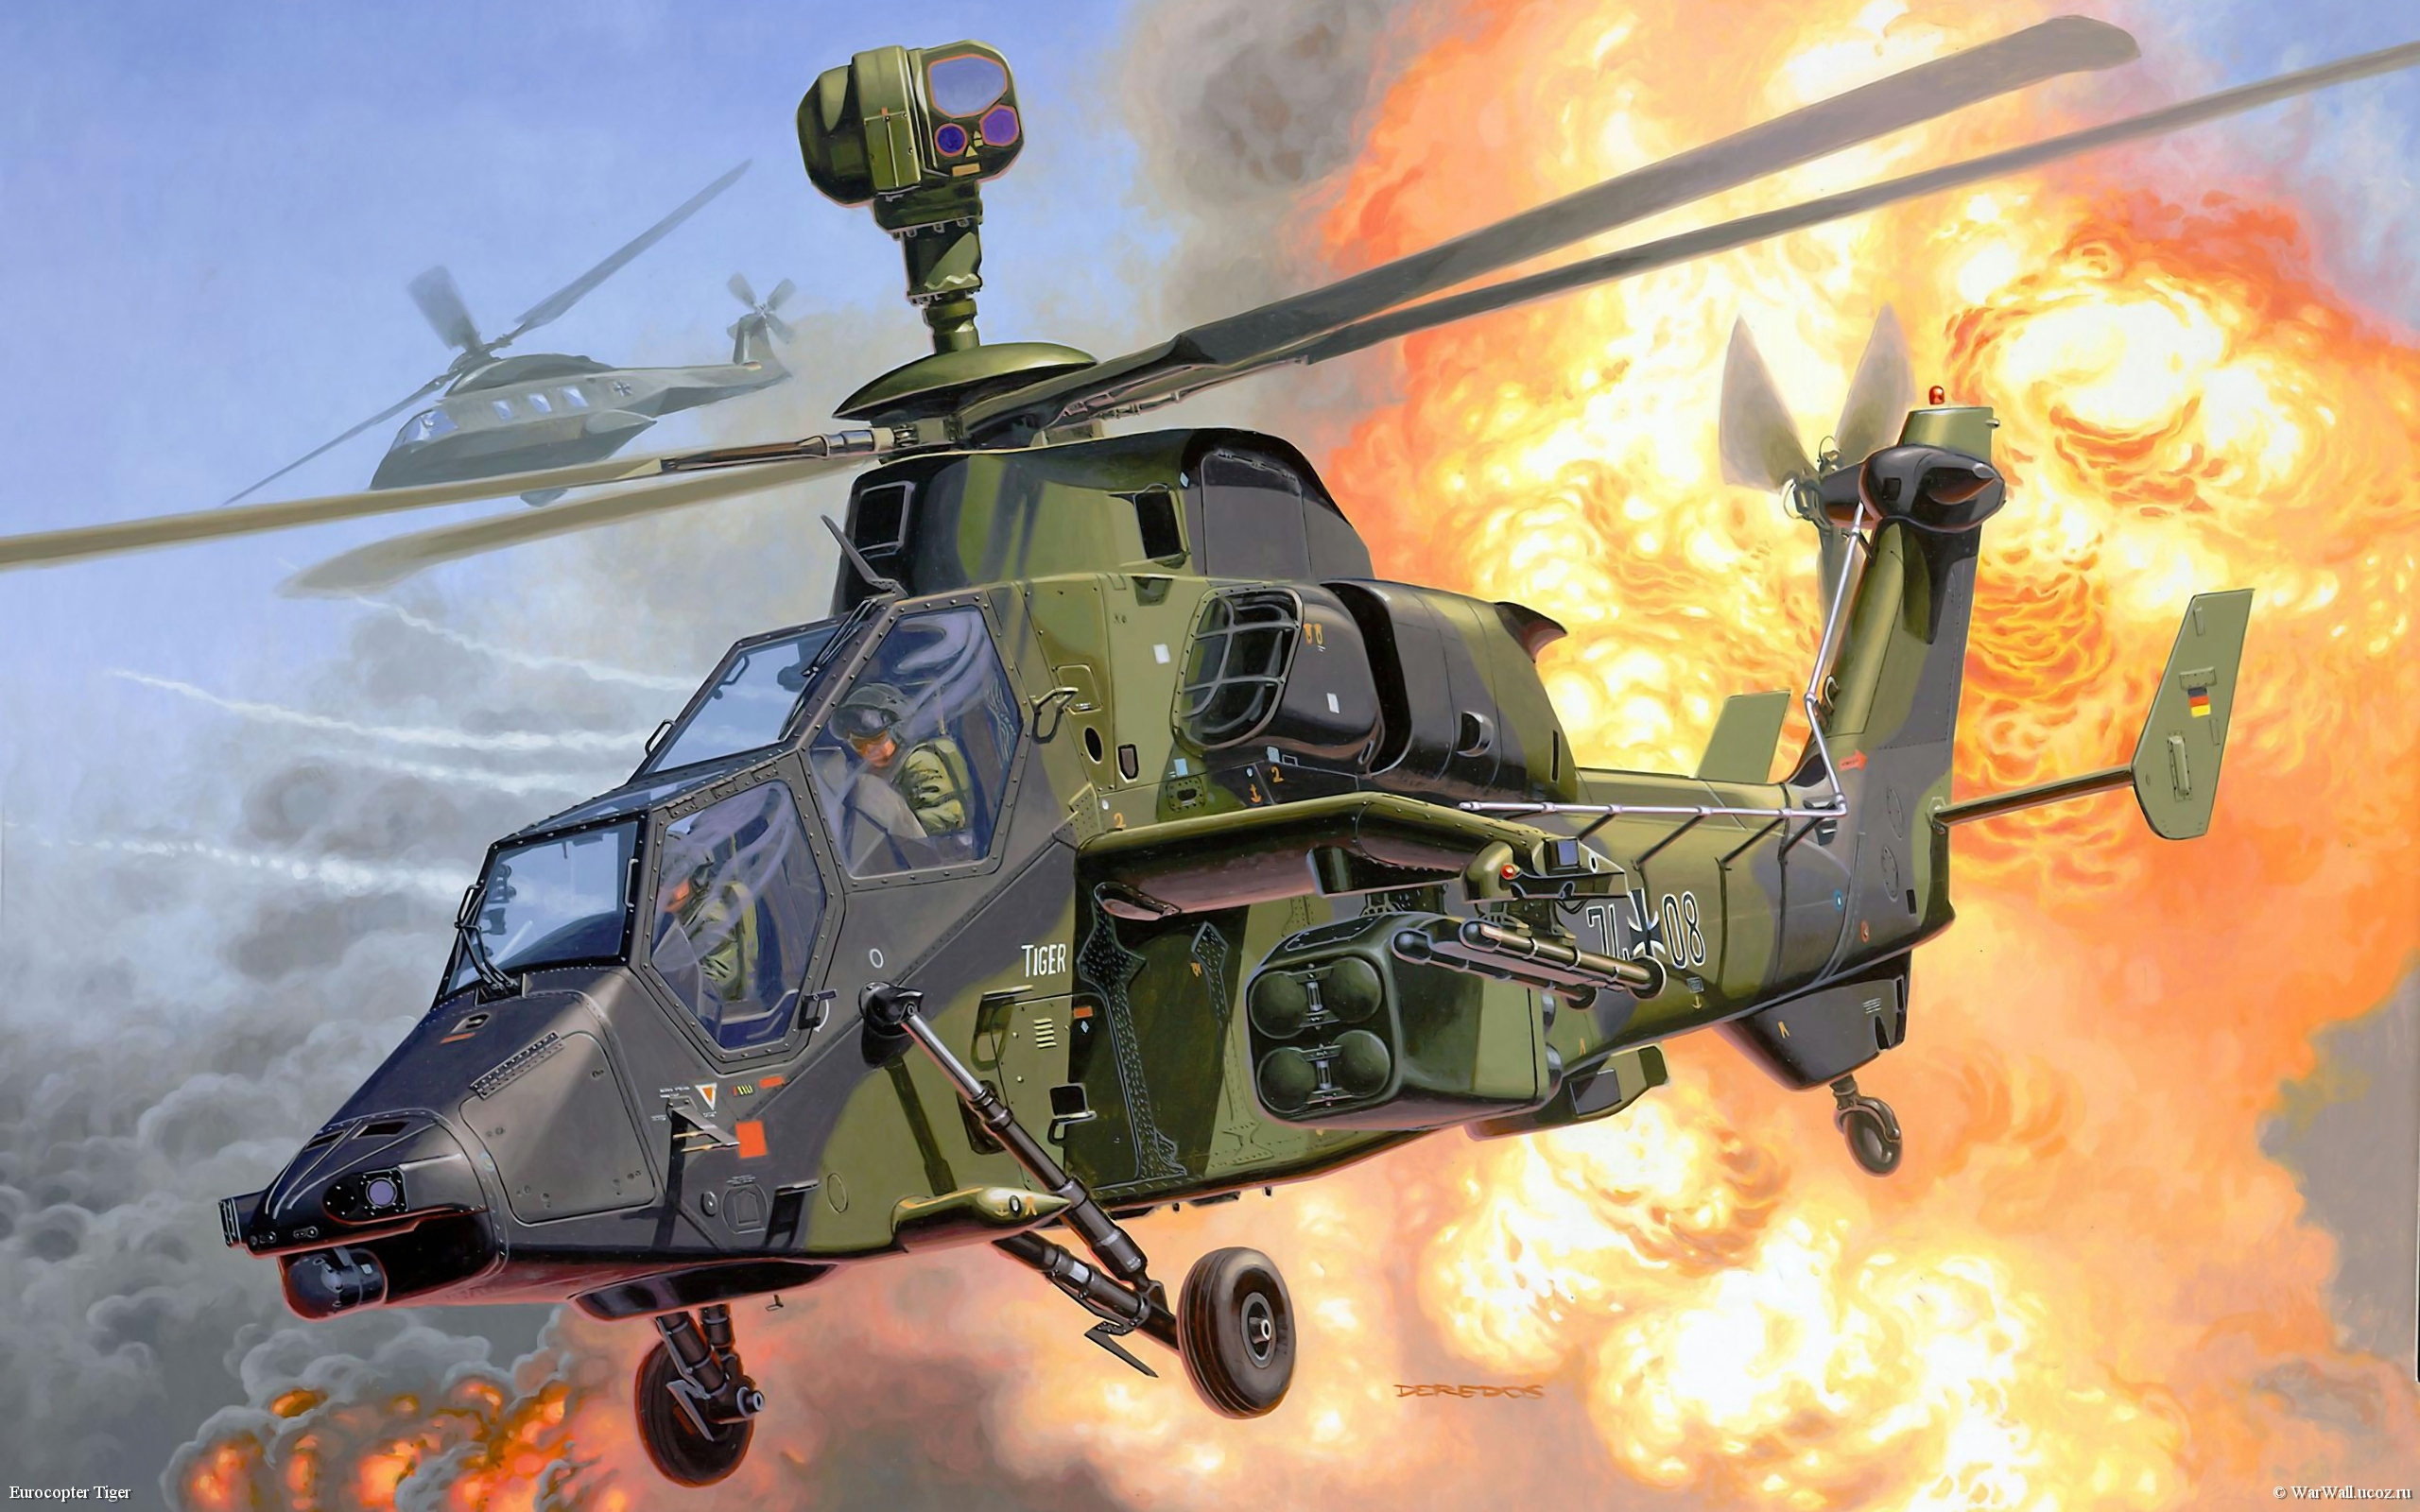 377416 Hintergrundbild herunterladen militär, eurocopter tiger, kampfhubschrauber, explosion, helikopter, militärhubschrauber - Bildschirmschoner und Bilder kostenlos